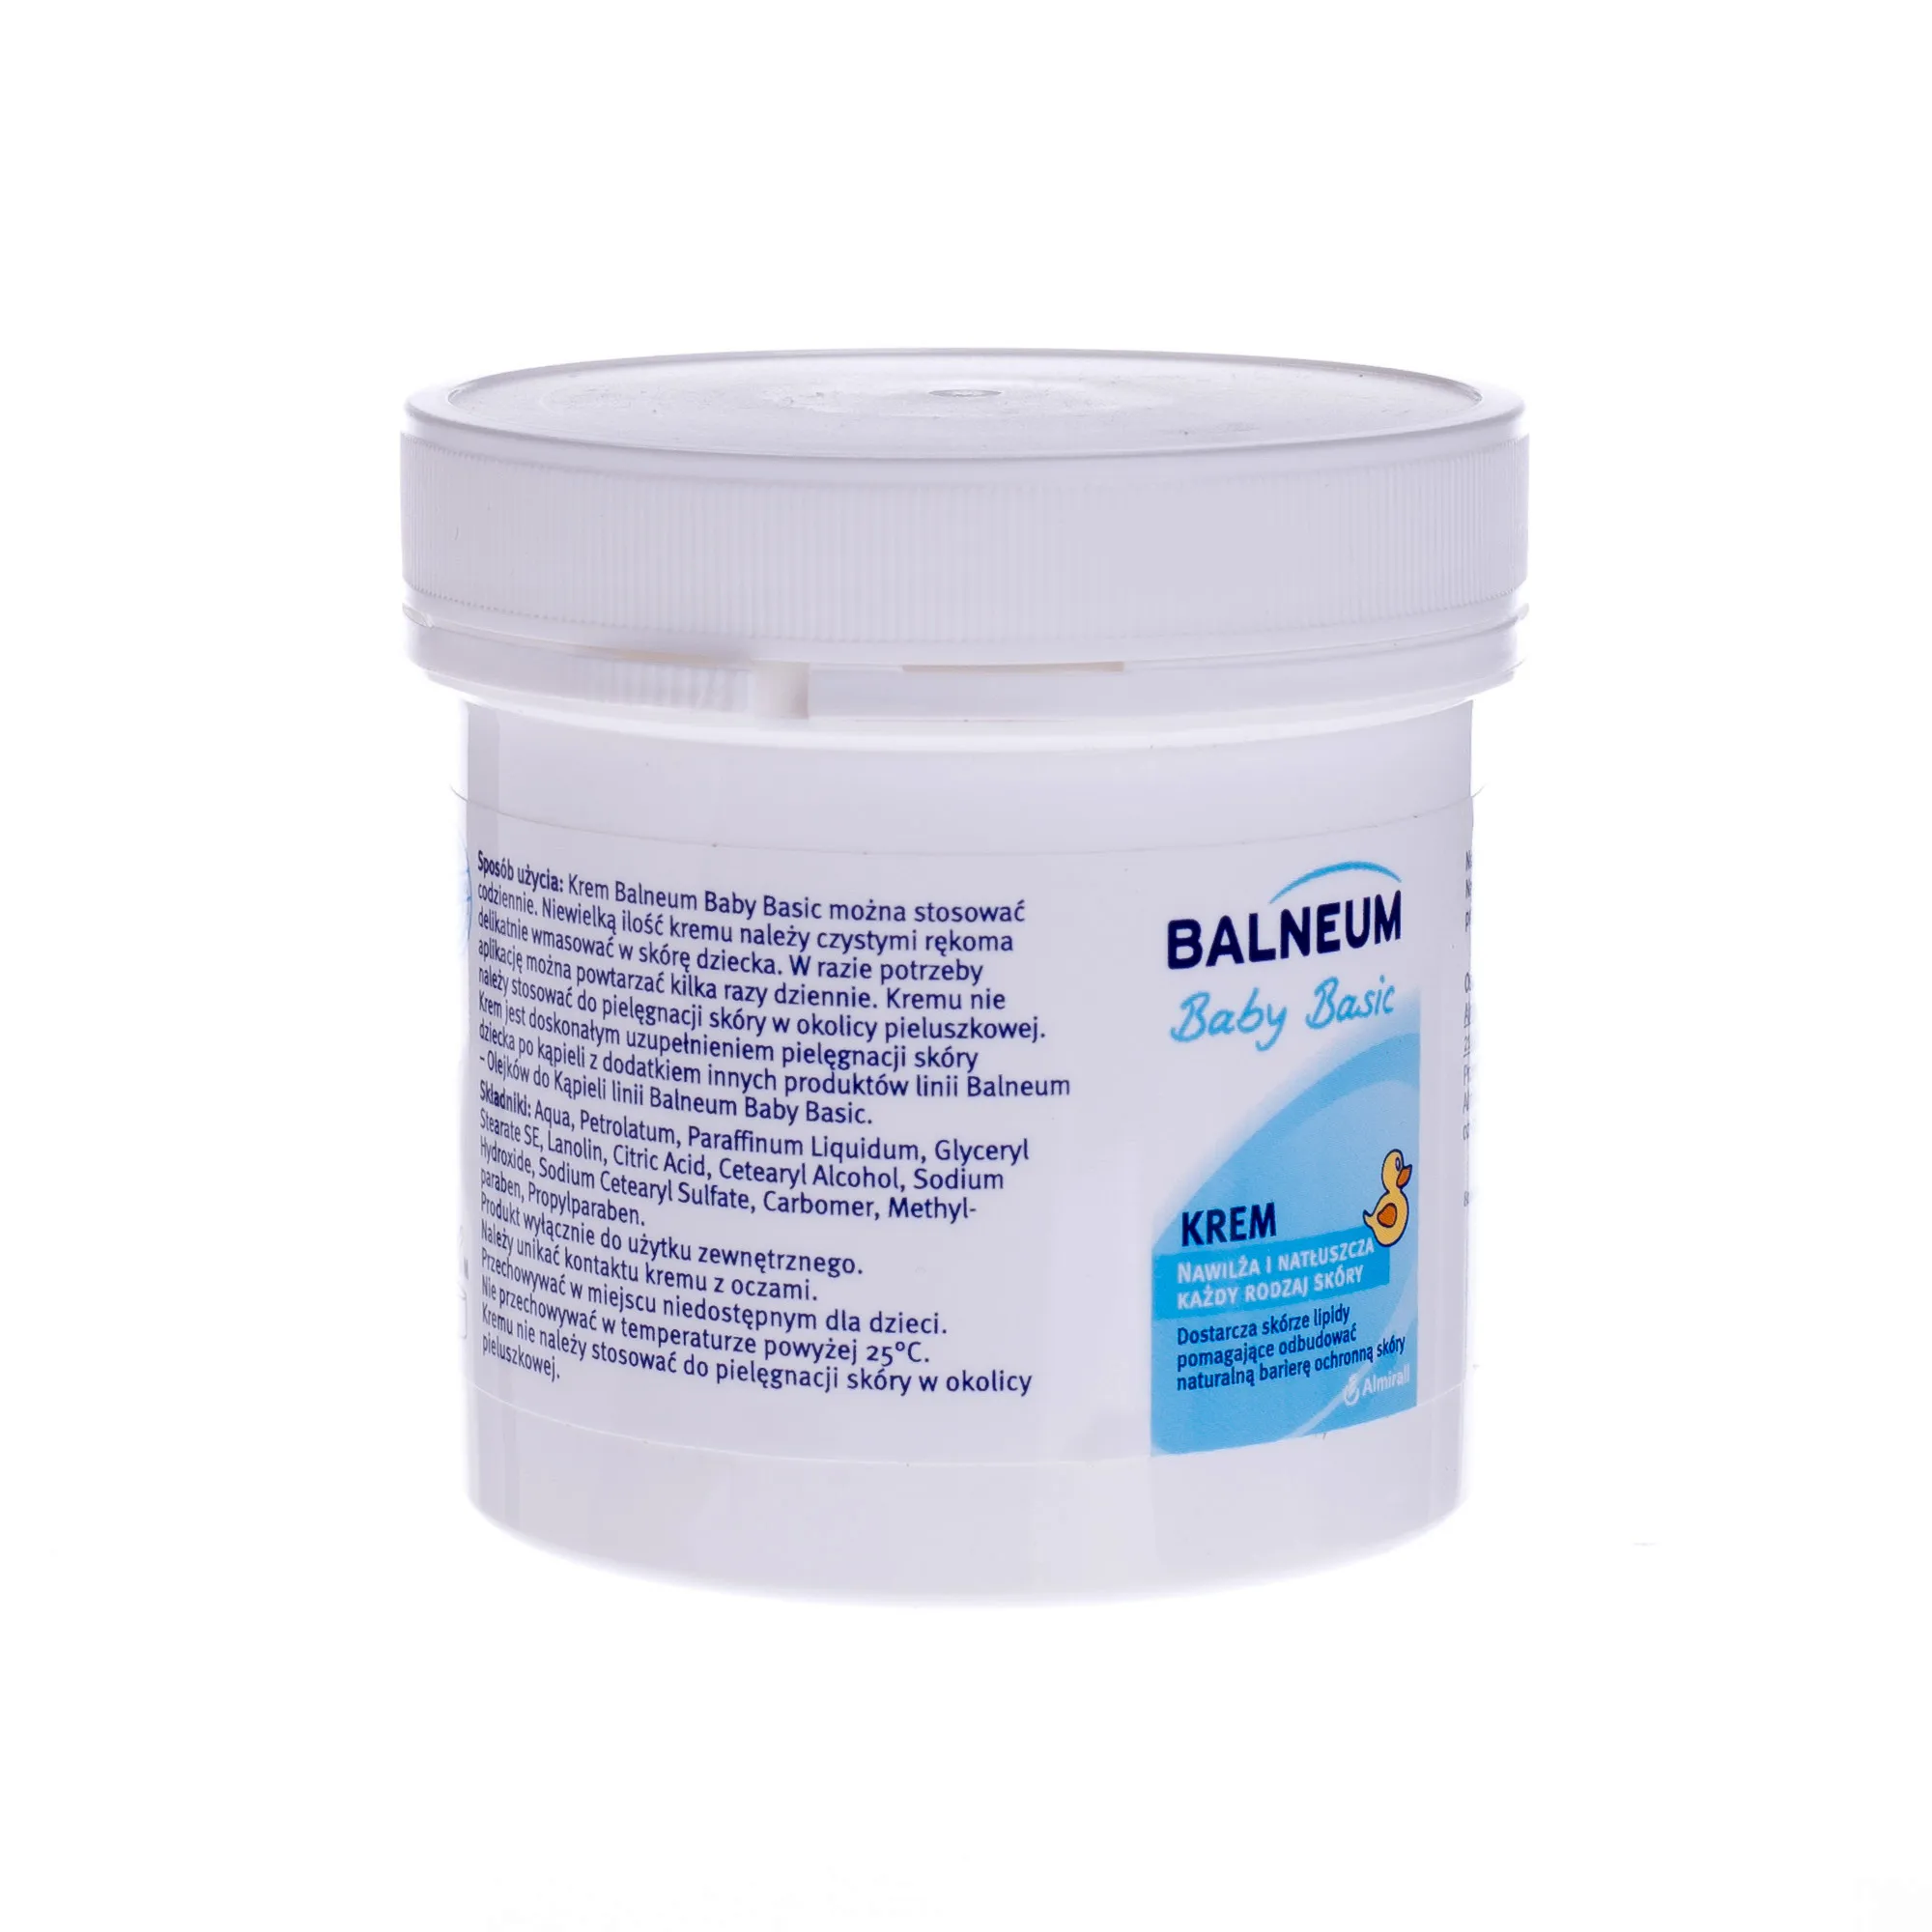 Balneum Baby Basic krem, 125 ml